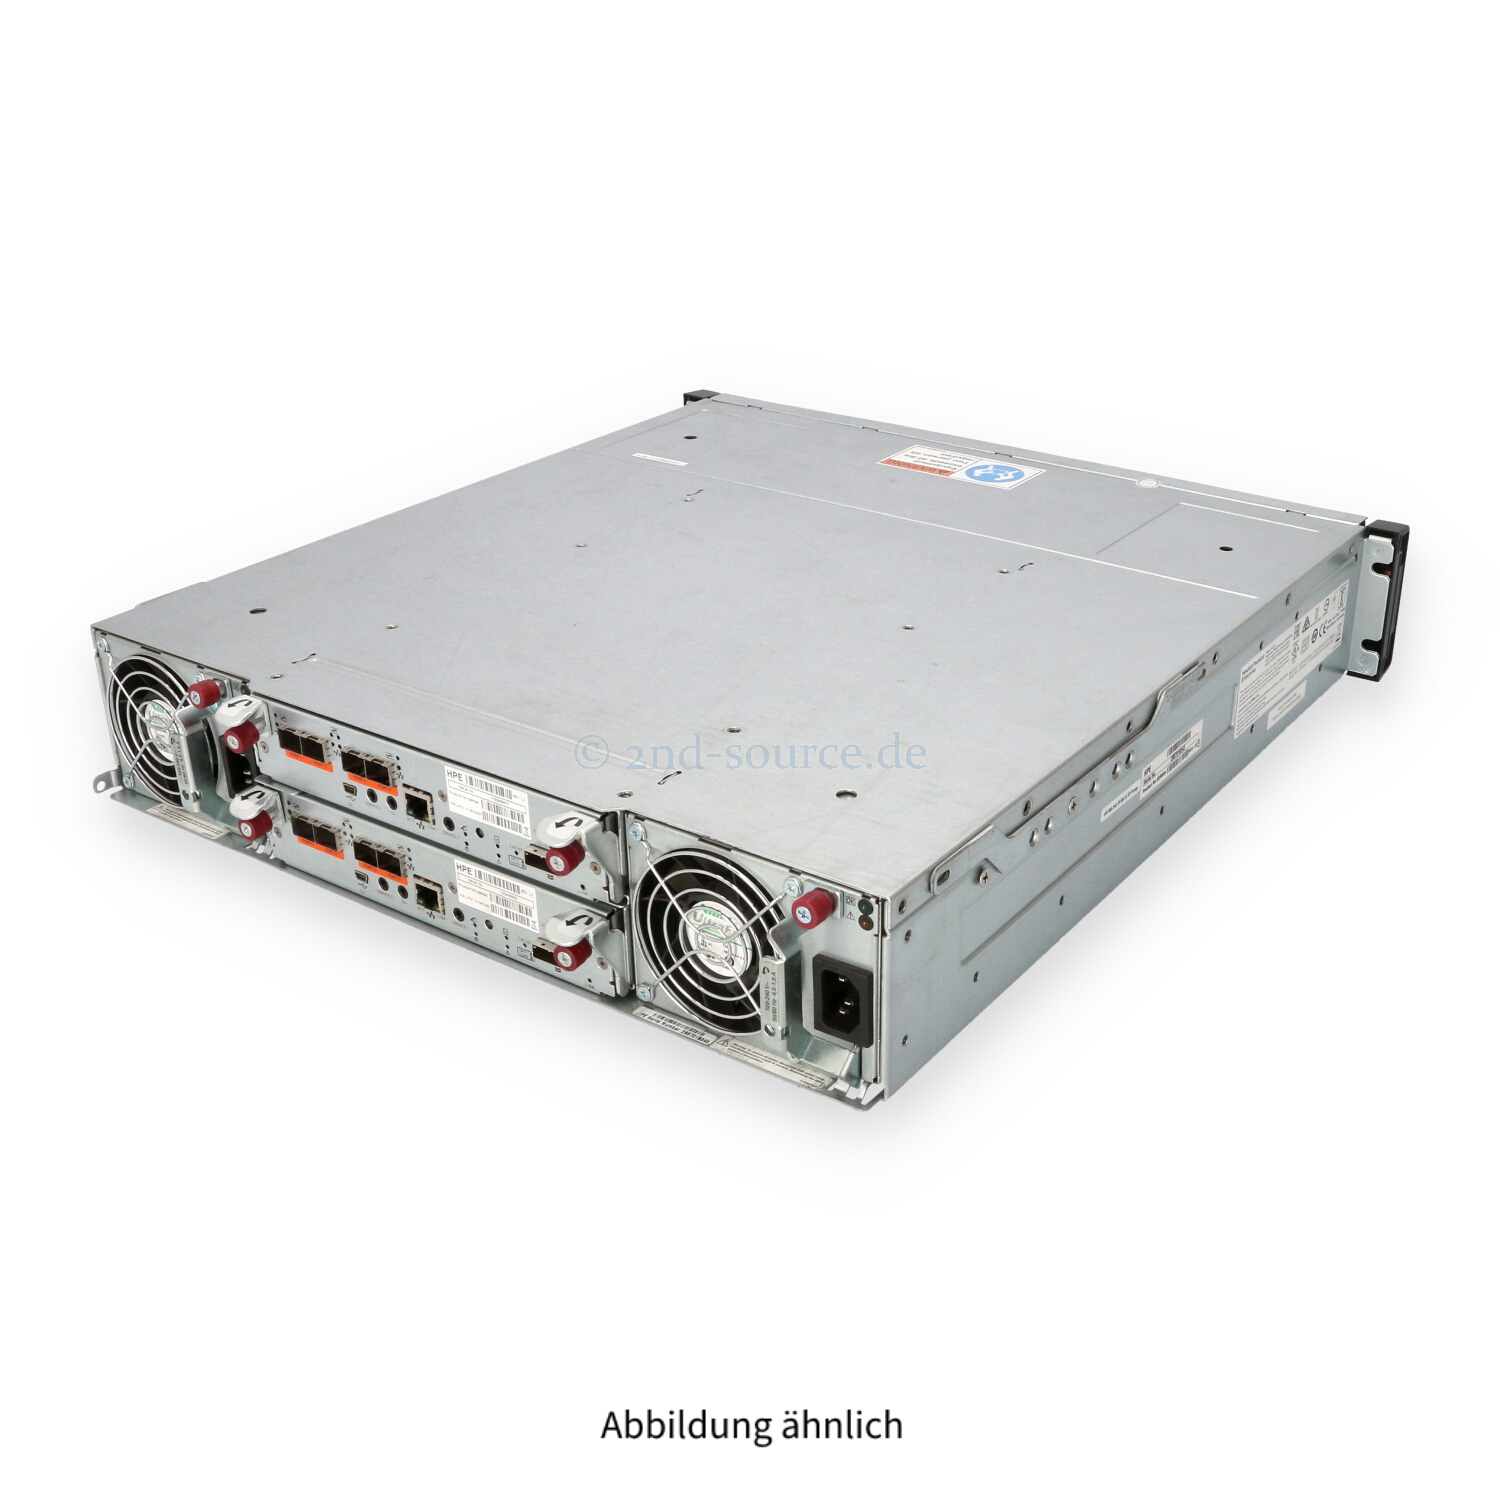 HPE MSA 2040 24x SFF SAN Dual Controller Storage K2R80A 639410-001